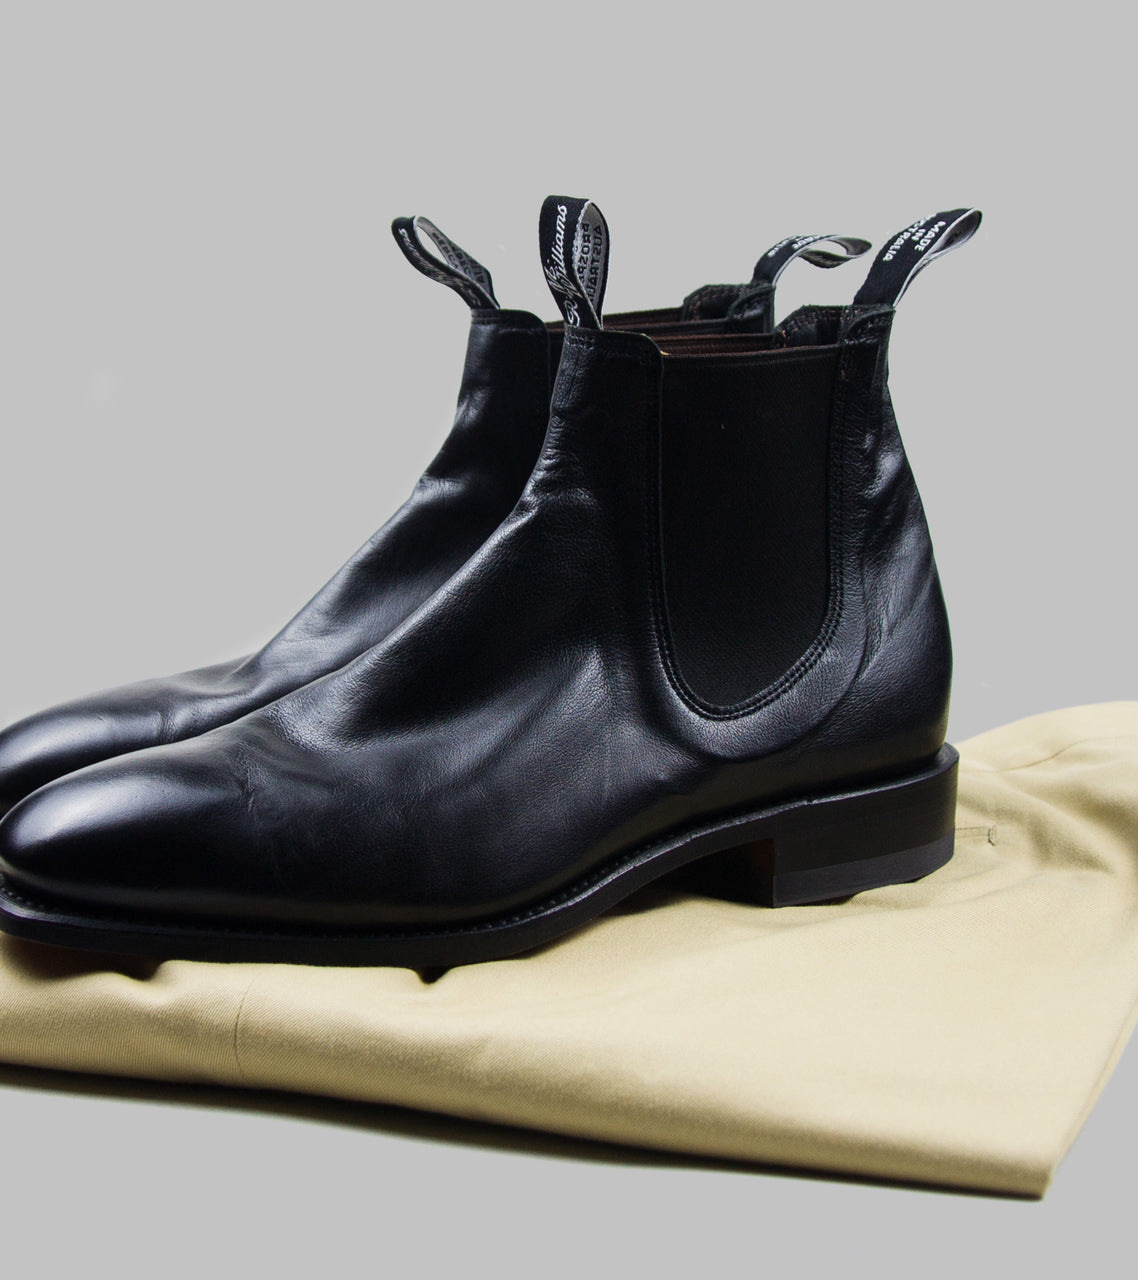 rm williams craftsman boots